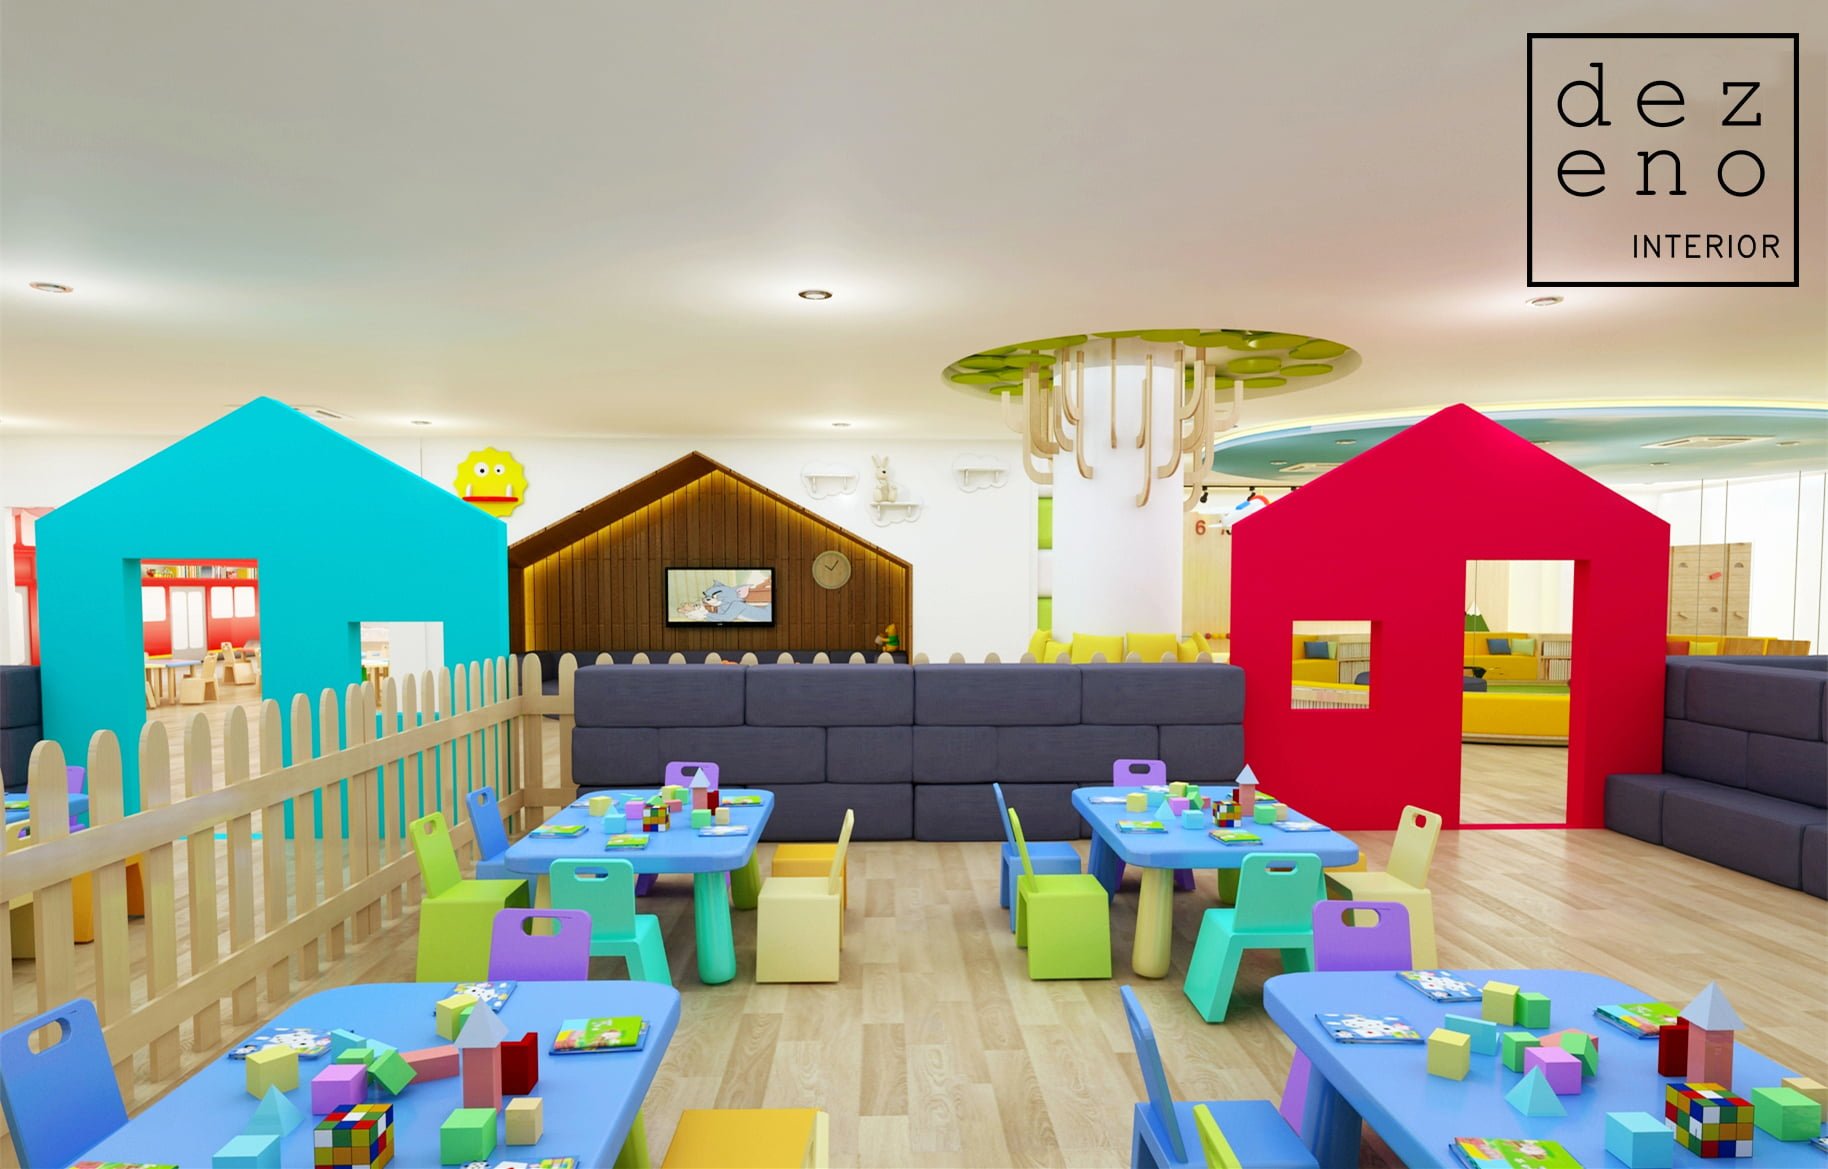 Putrajaya Childcare Centre Kindergarten